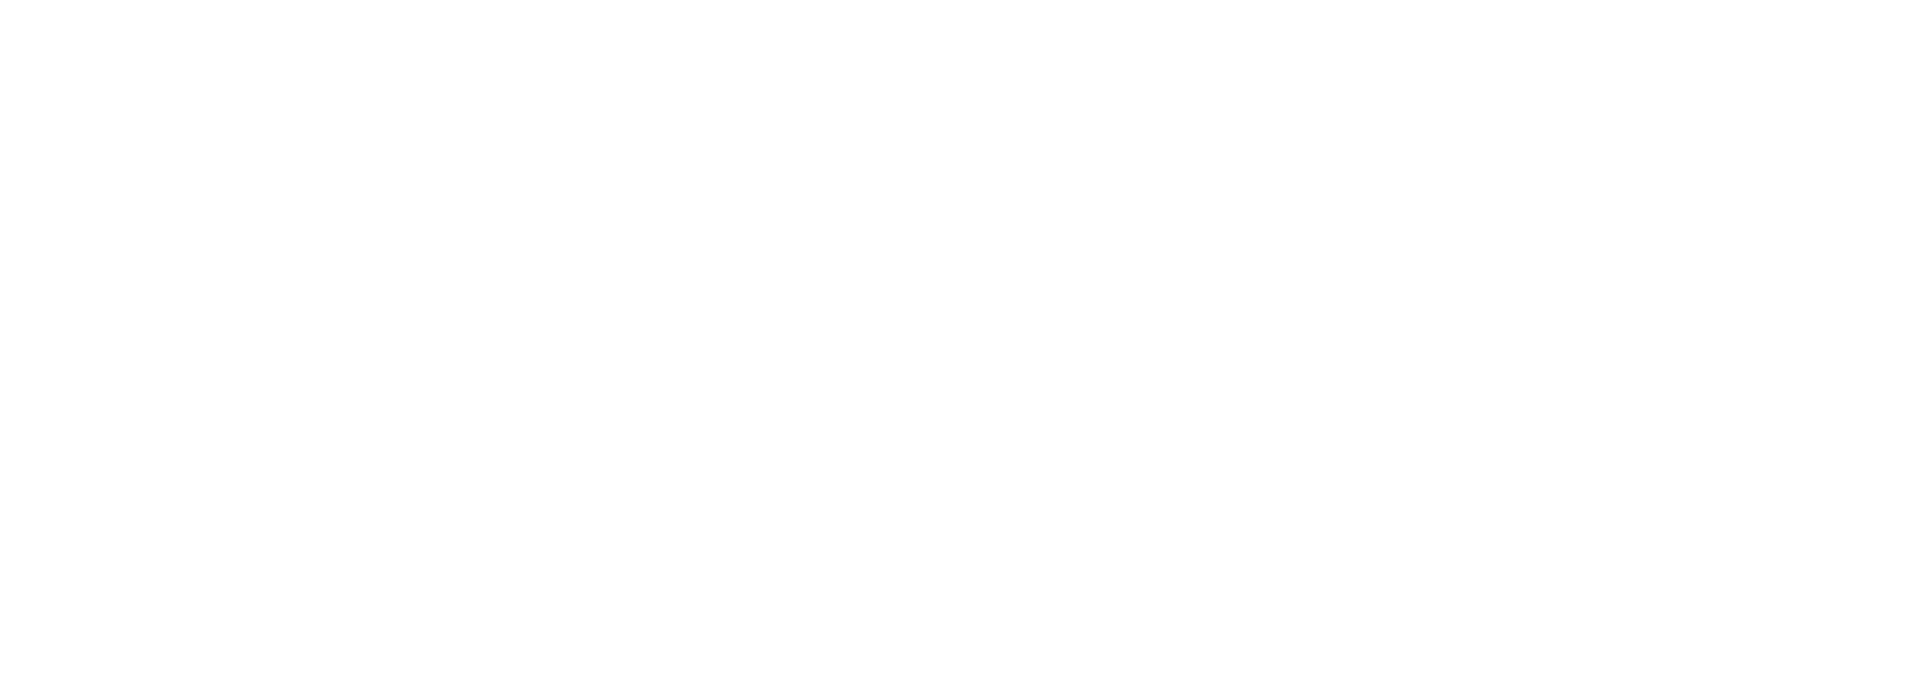 Splynk.co.uk Logo